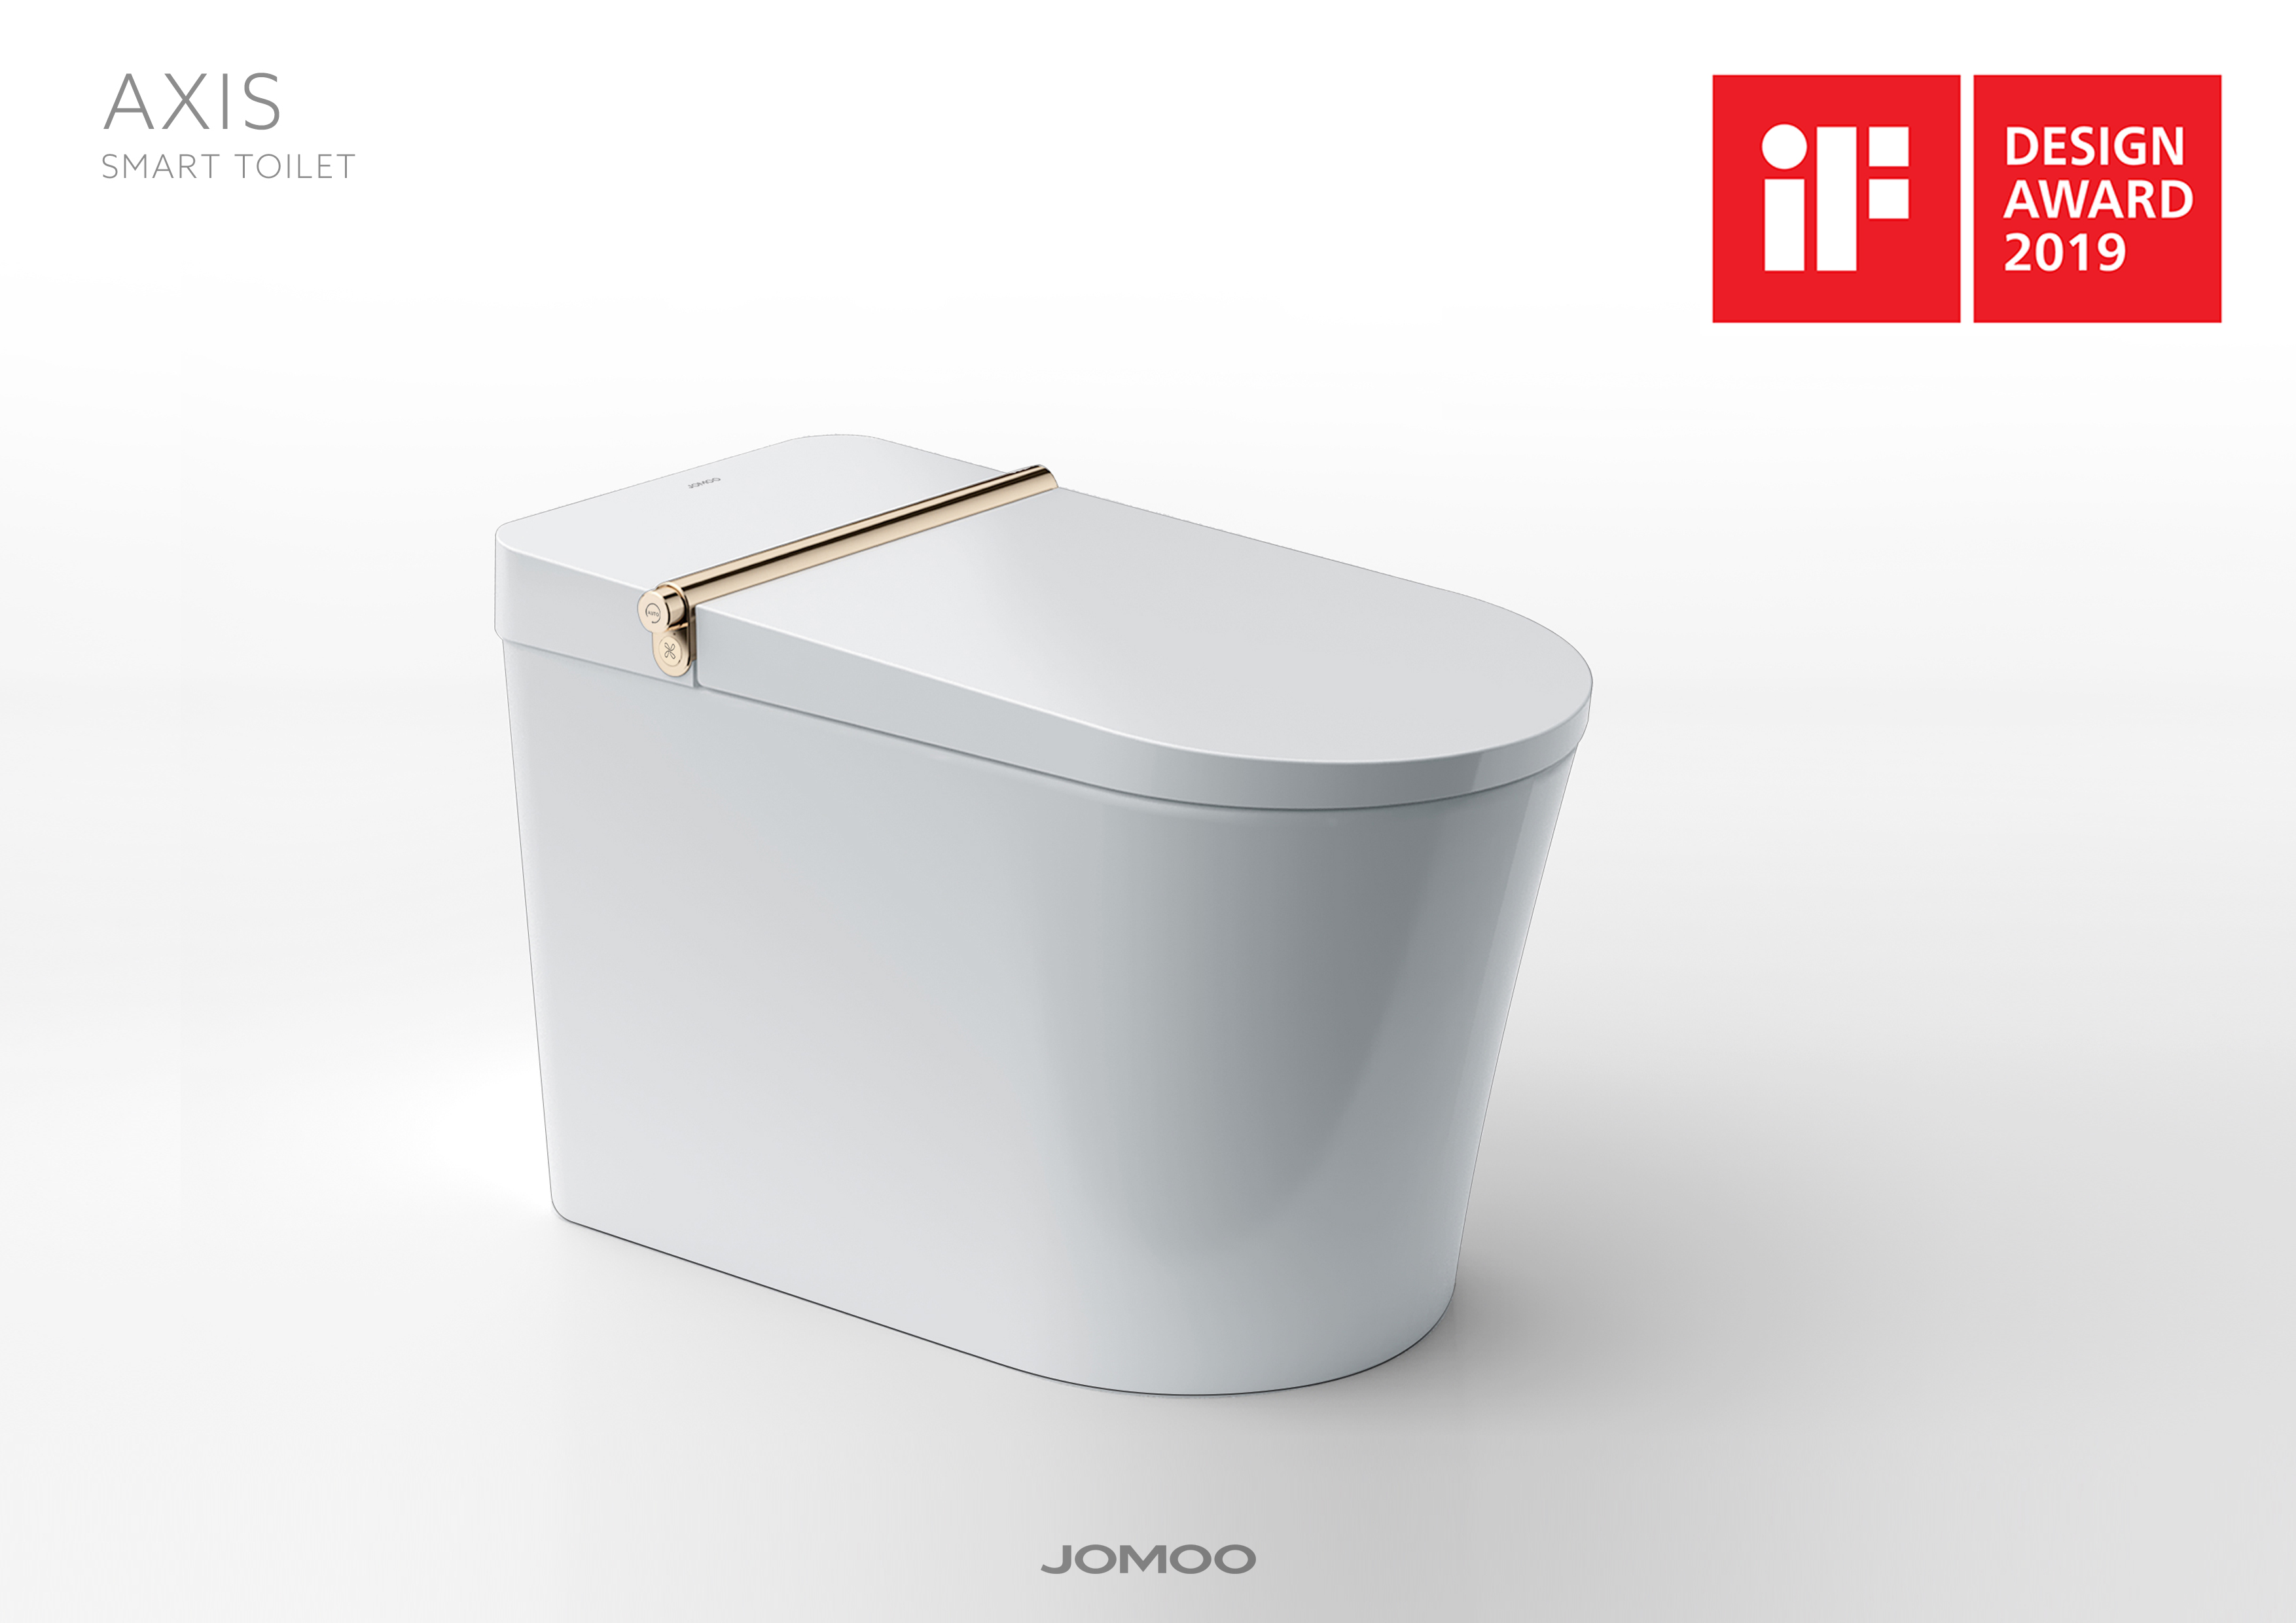 JOMOO AXIS smart toilet - iF design award 2019 winner.jpg